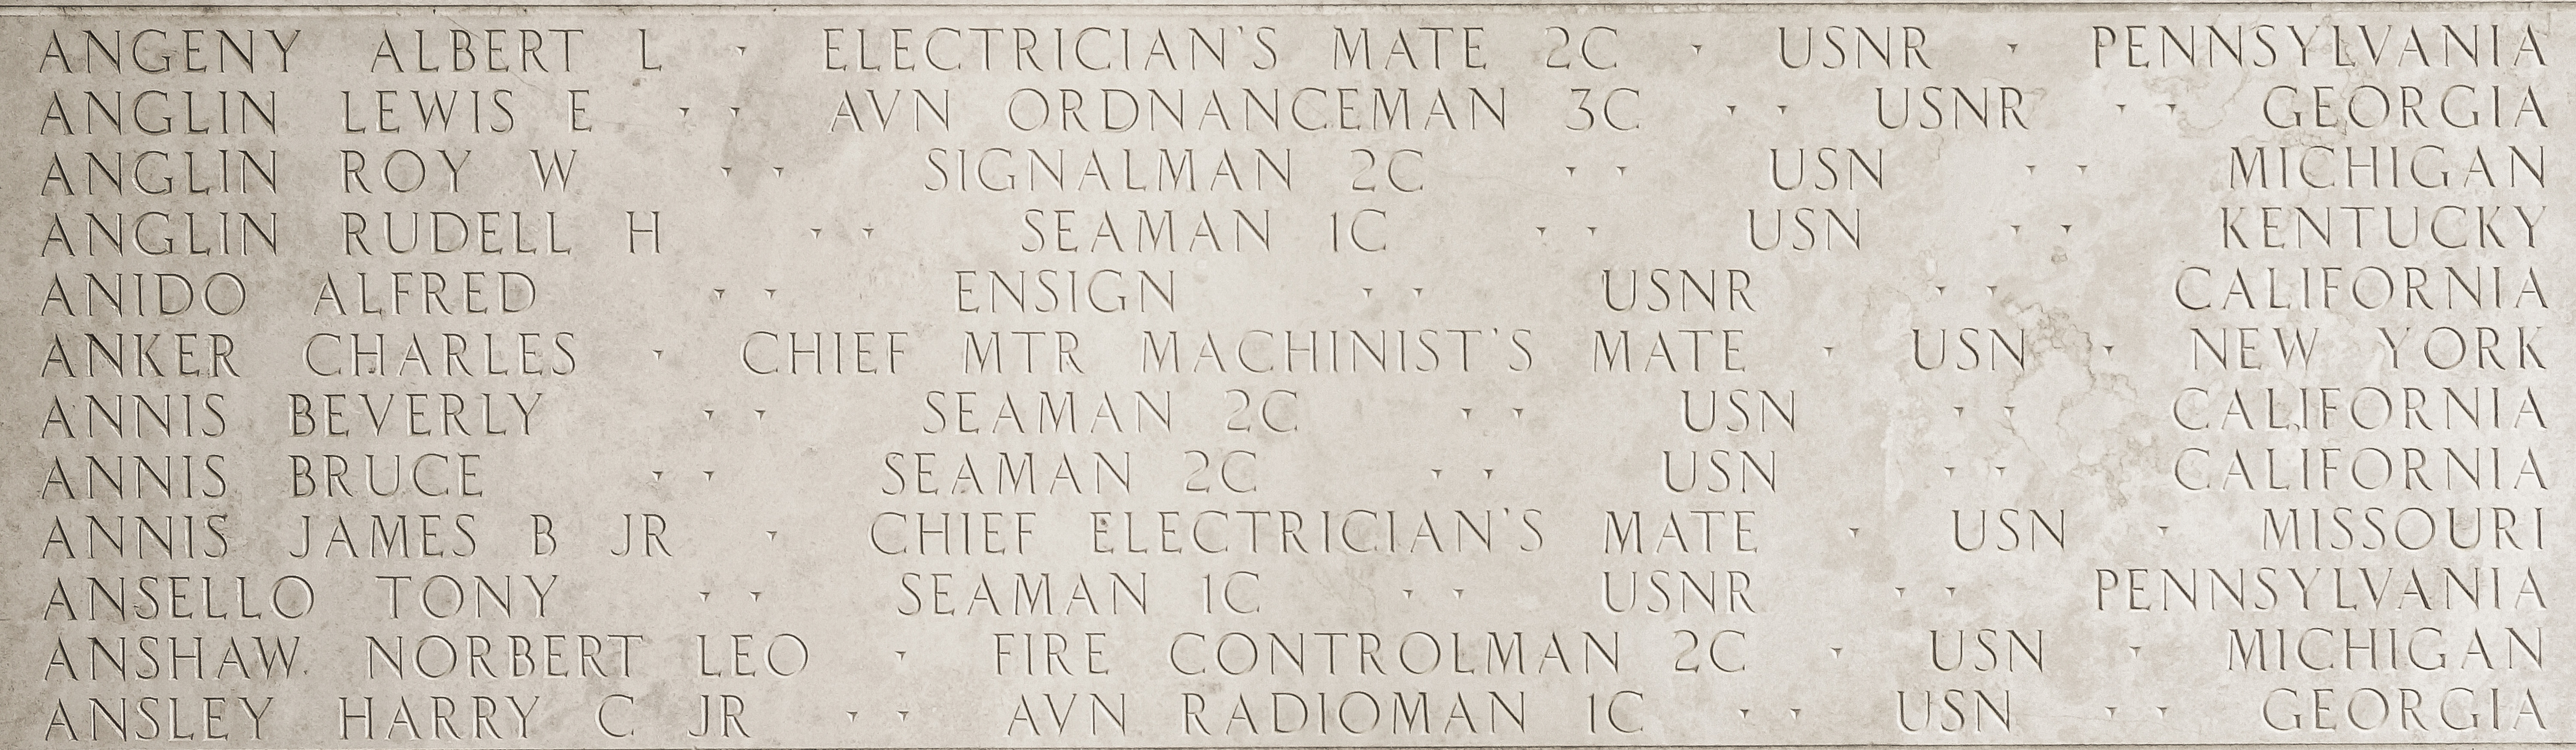 Roy W. Anglin, Signalman Second Class